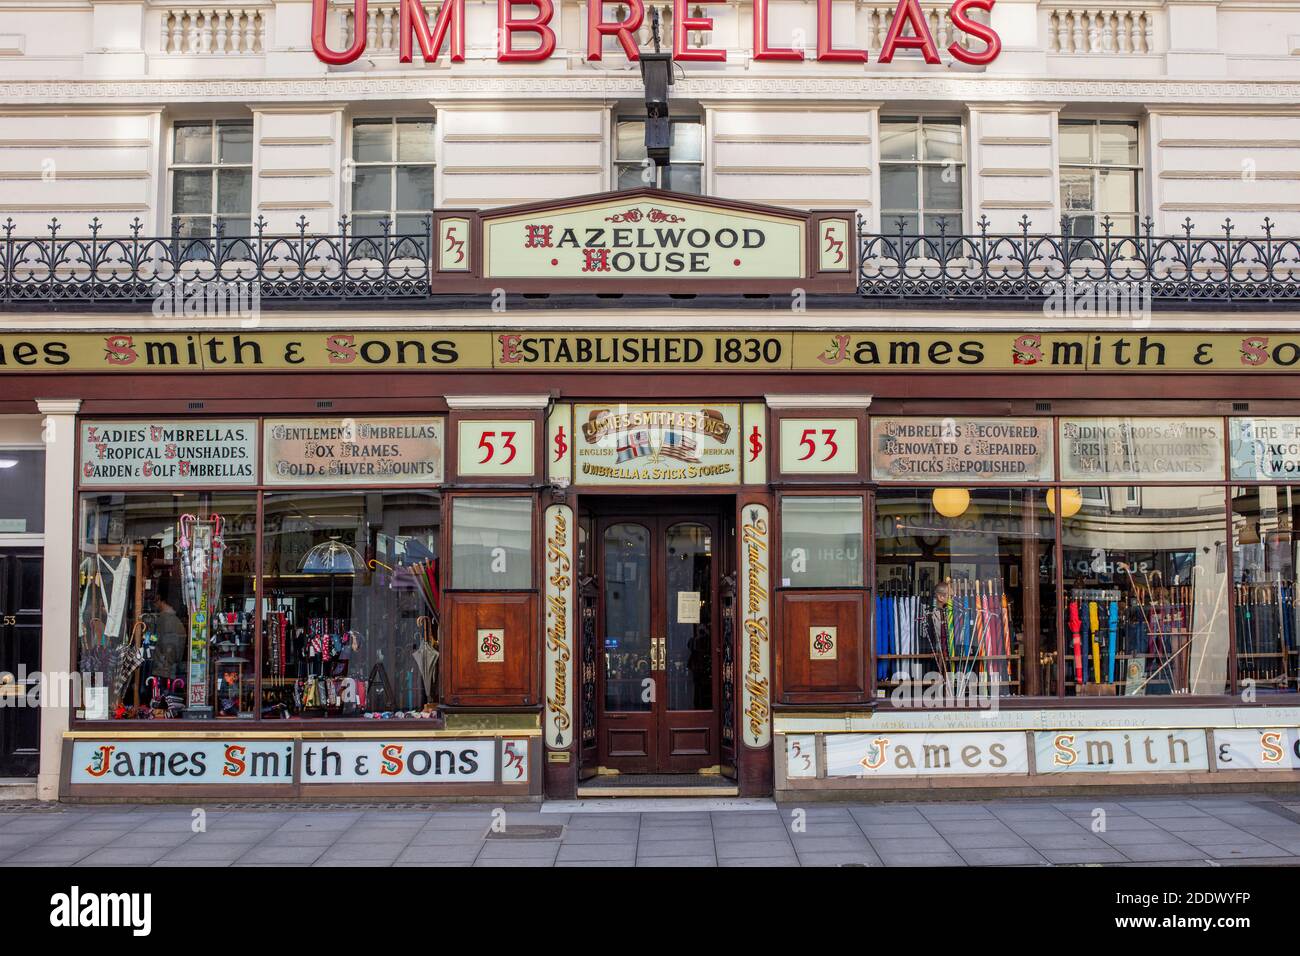 Jas (James) Smith & Sons Umbrella Shop; Hazelwood House, 53 New Oxford St, London. A traditional establishment for umbrellas and walking sticks. Stock Photo